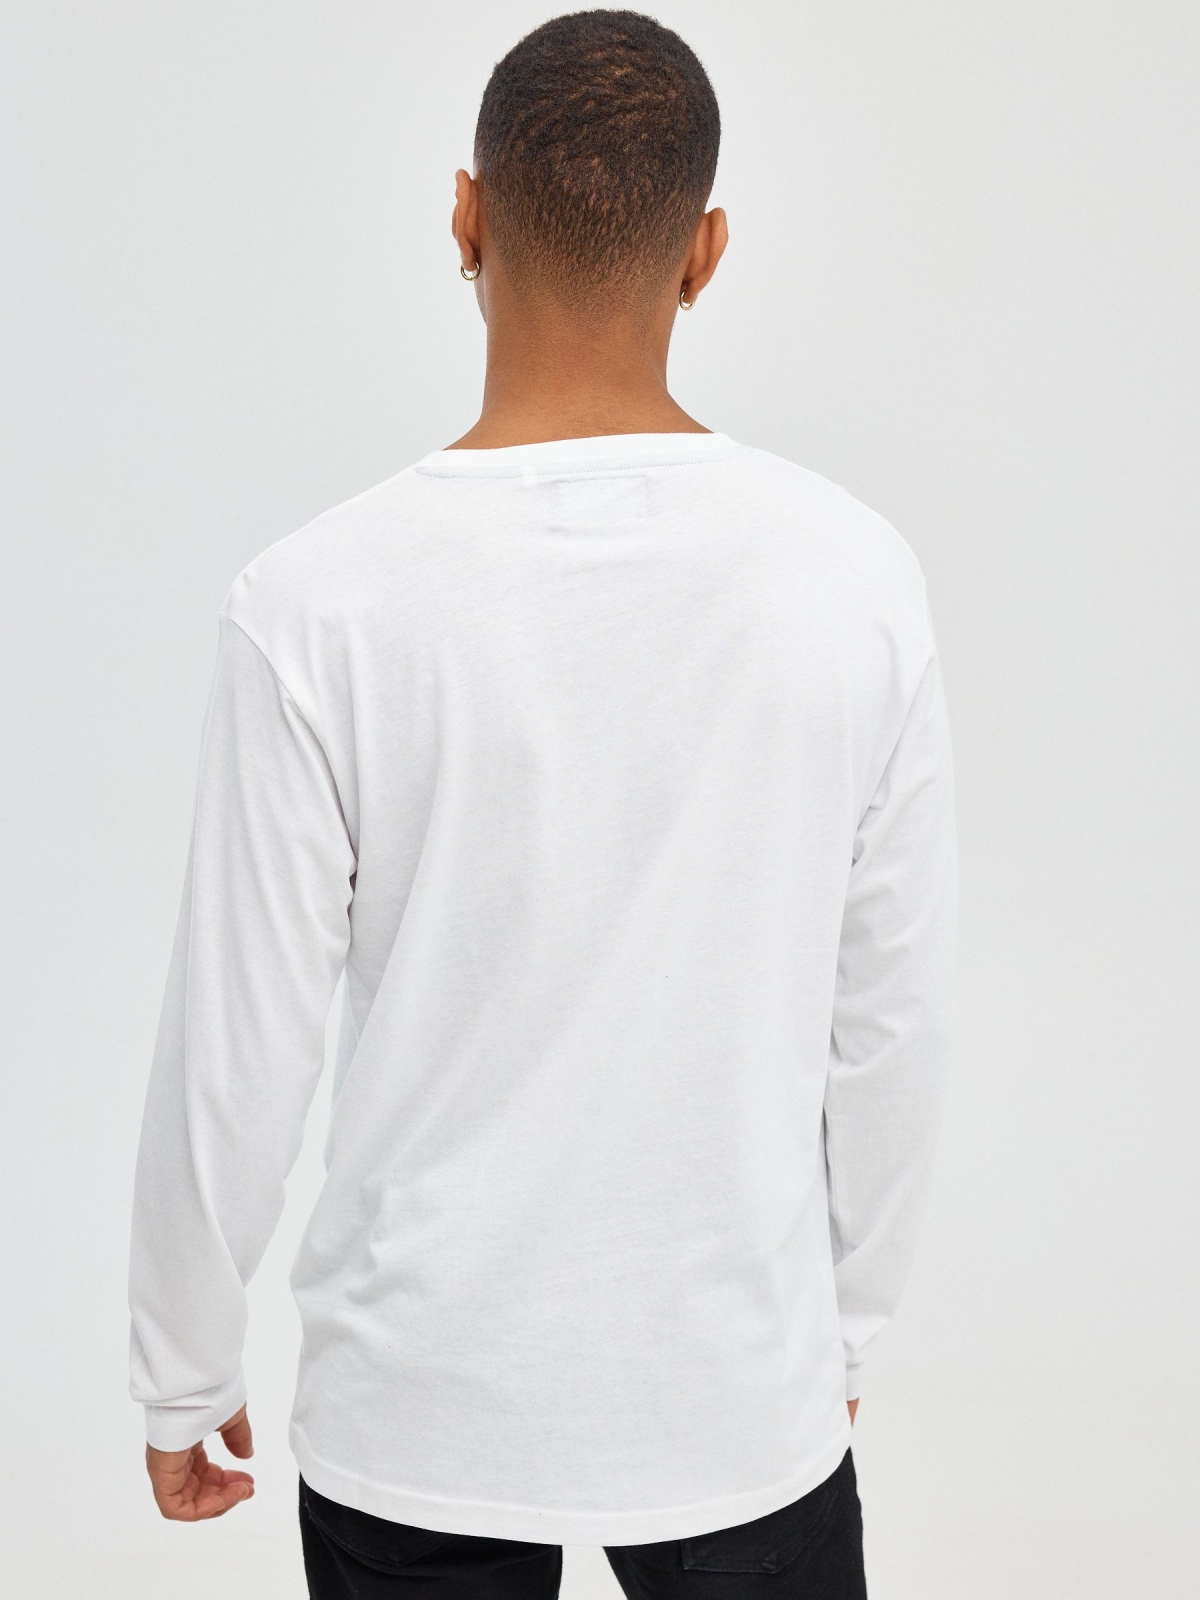 INSIDE regular T-shirt white middle back view